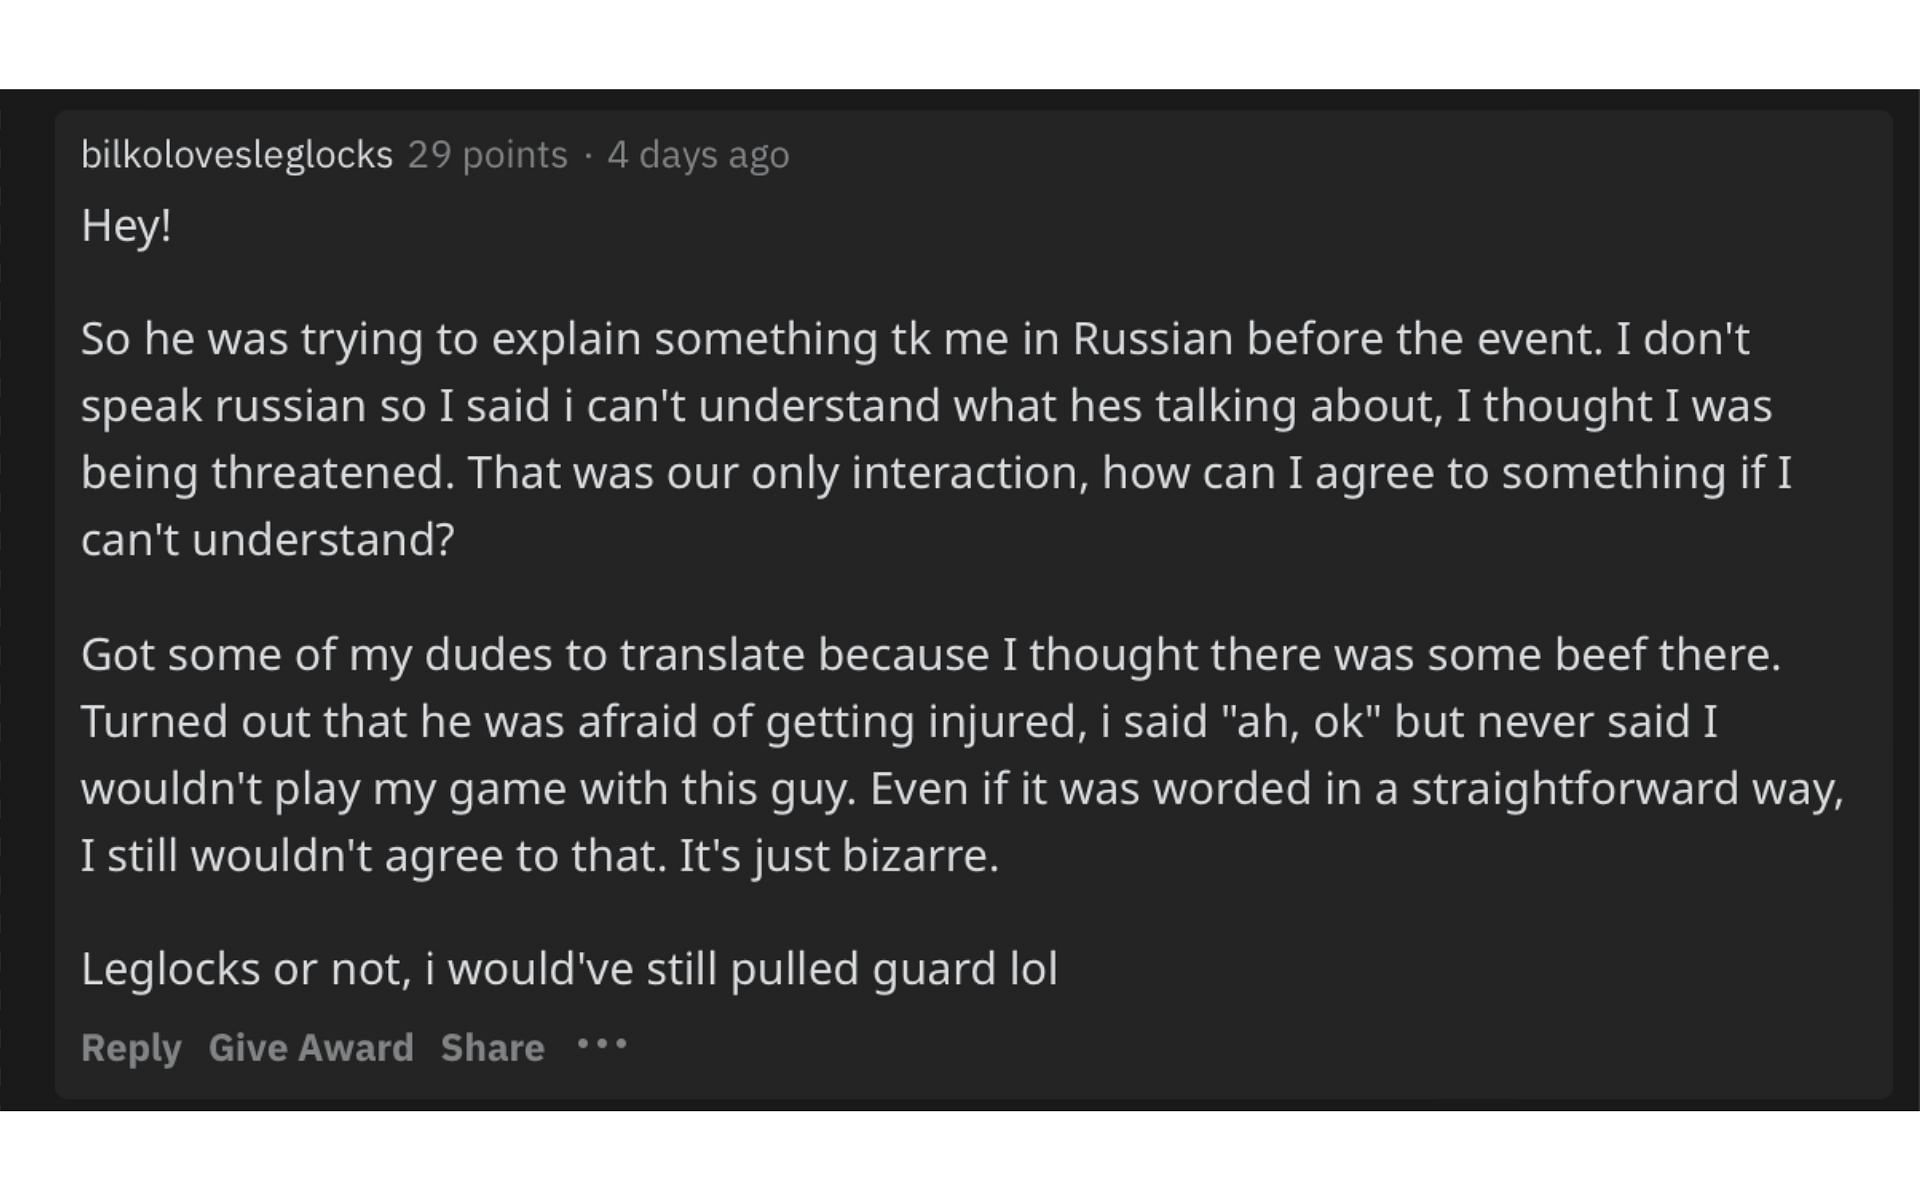 Statement by Jakub Bilko on Reddit [Image courtesy: www.reddit.com]